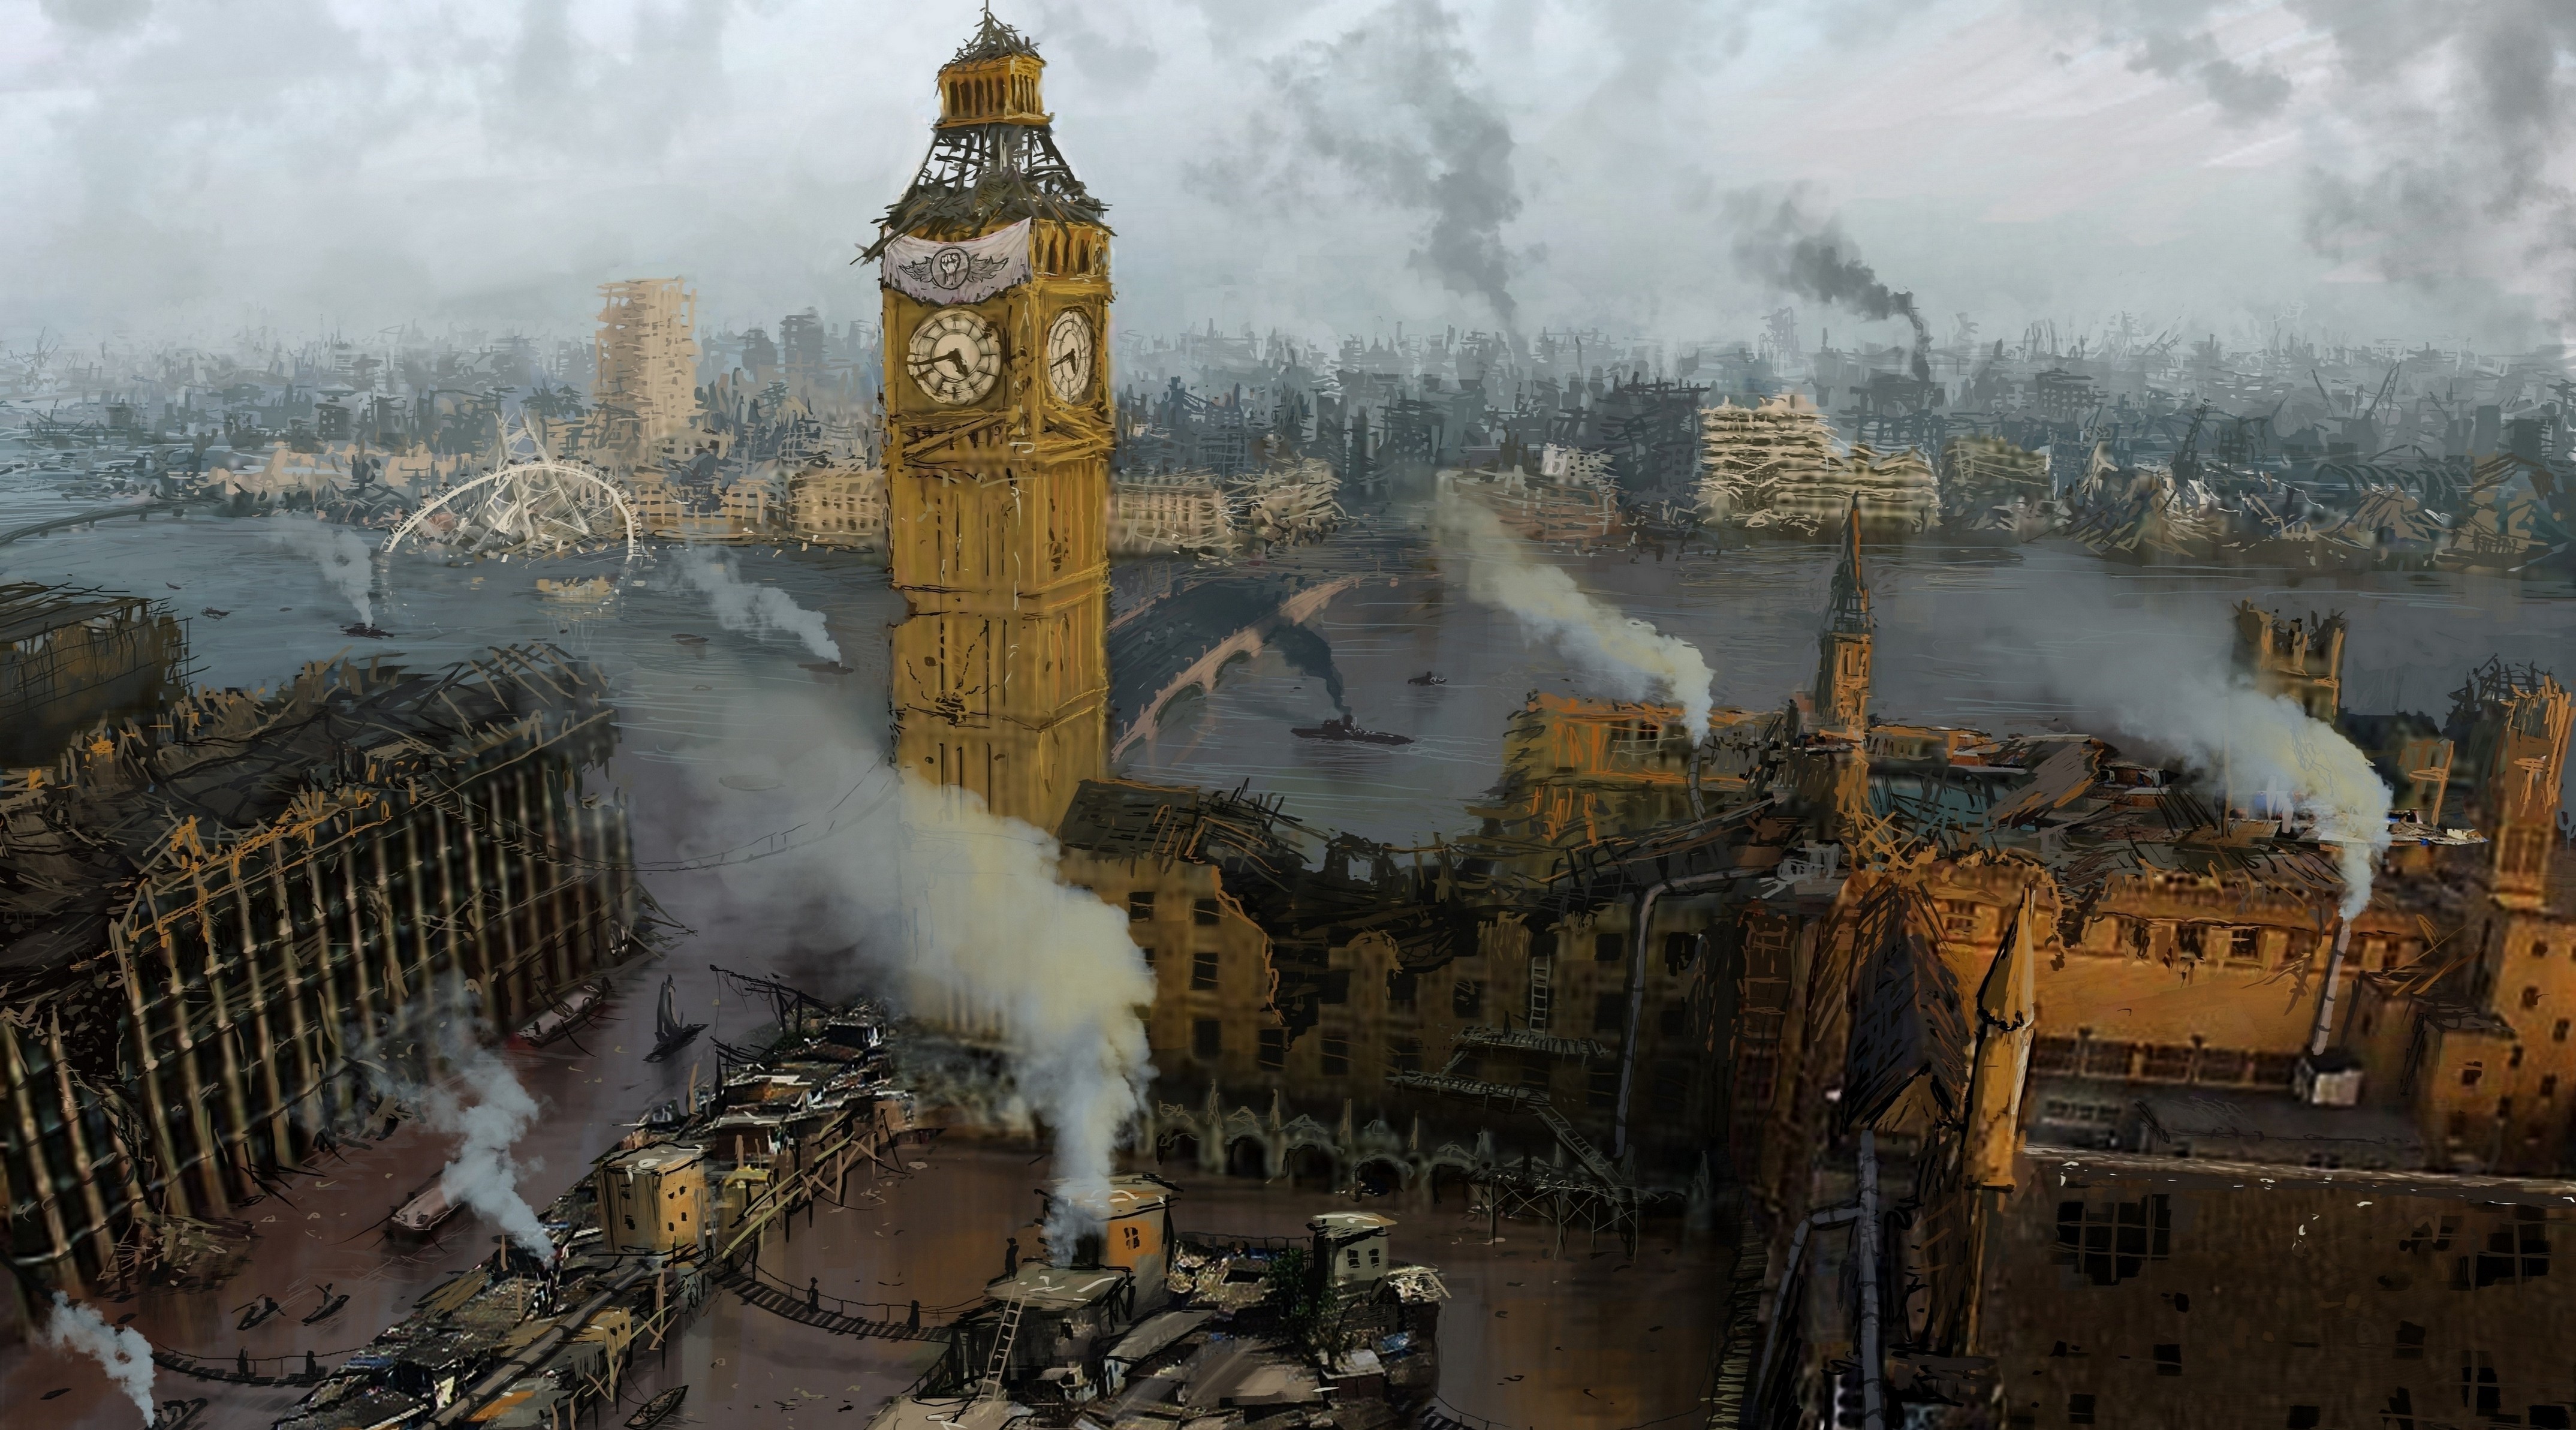 General 4297x2385 artwork London apocalyptic digital art England UK smoke city cityscape bridge Big Ben ruins